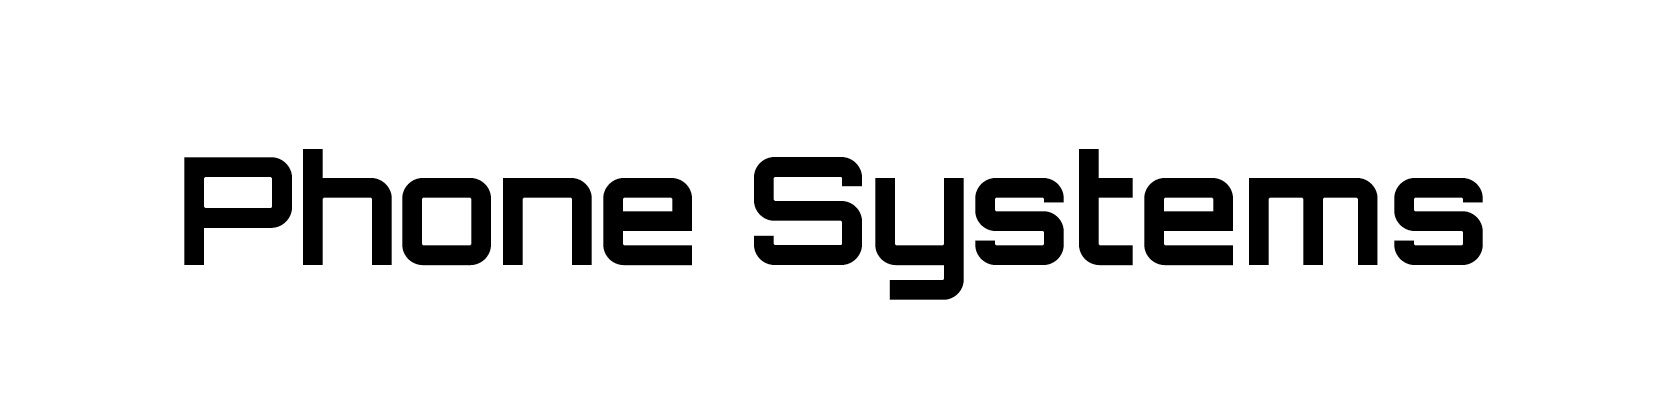 Phone Systems.jpg